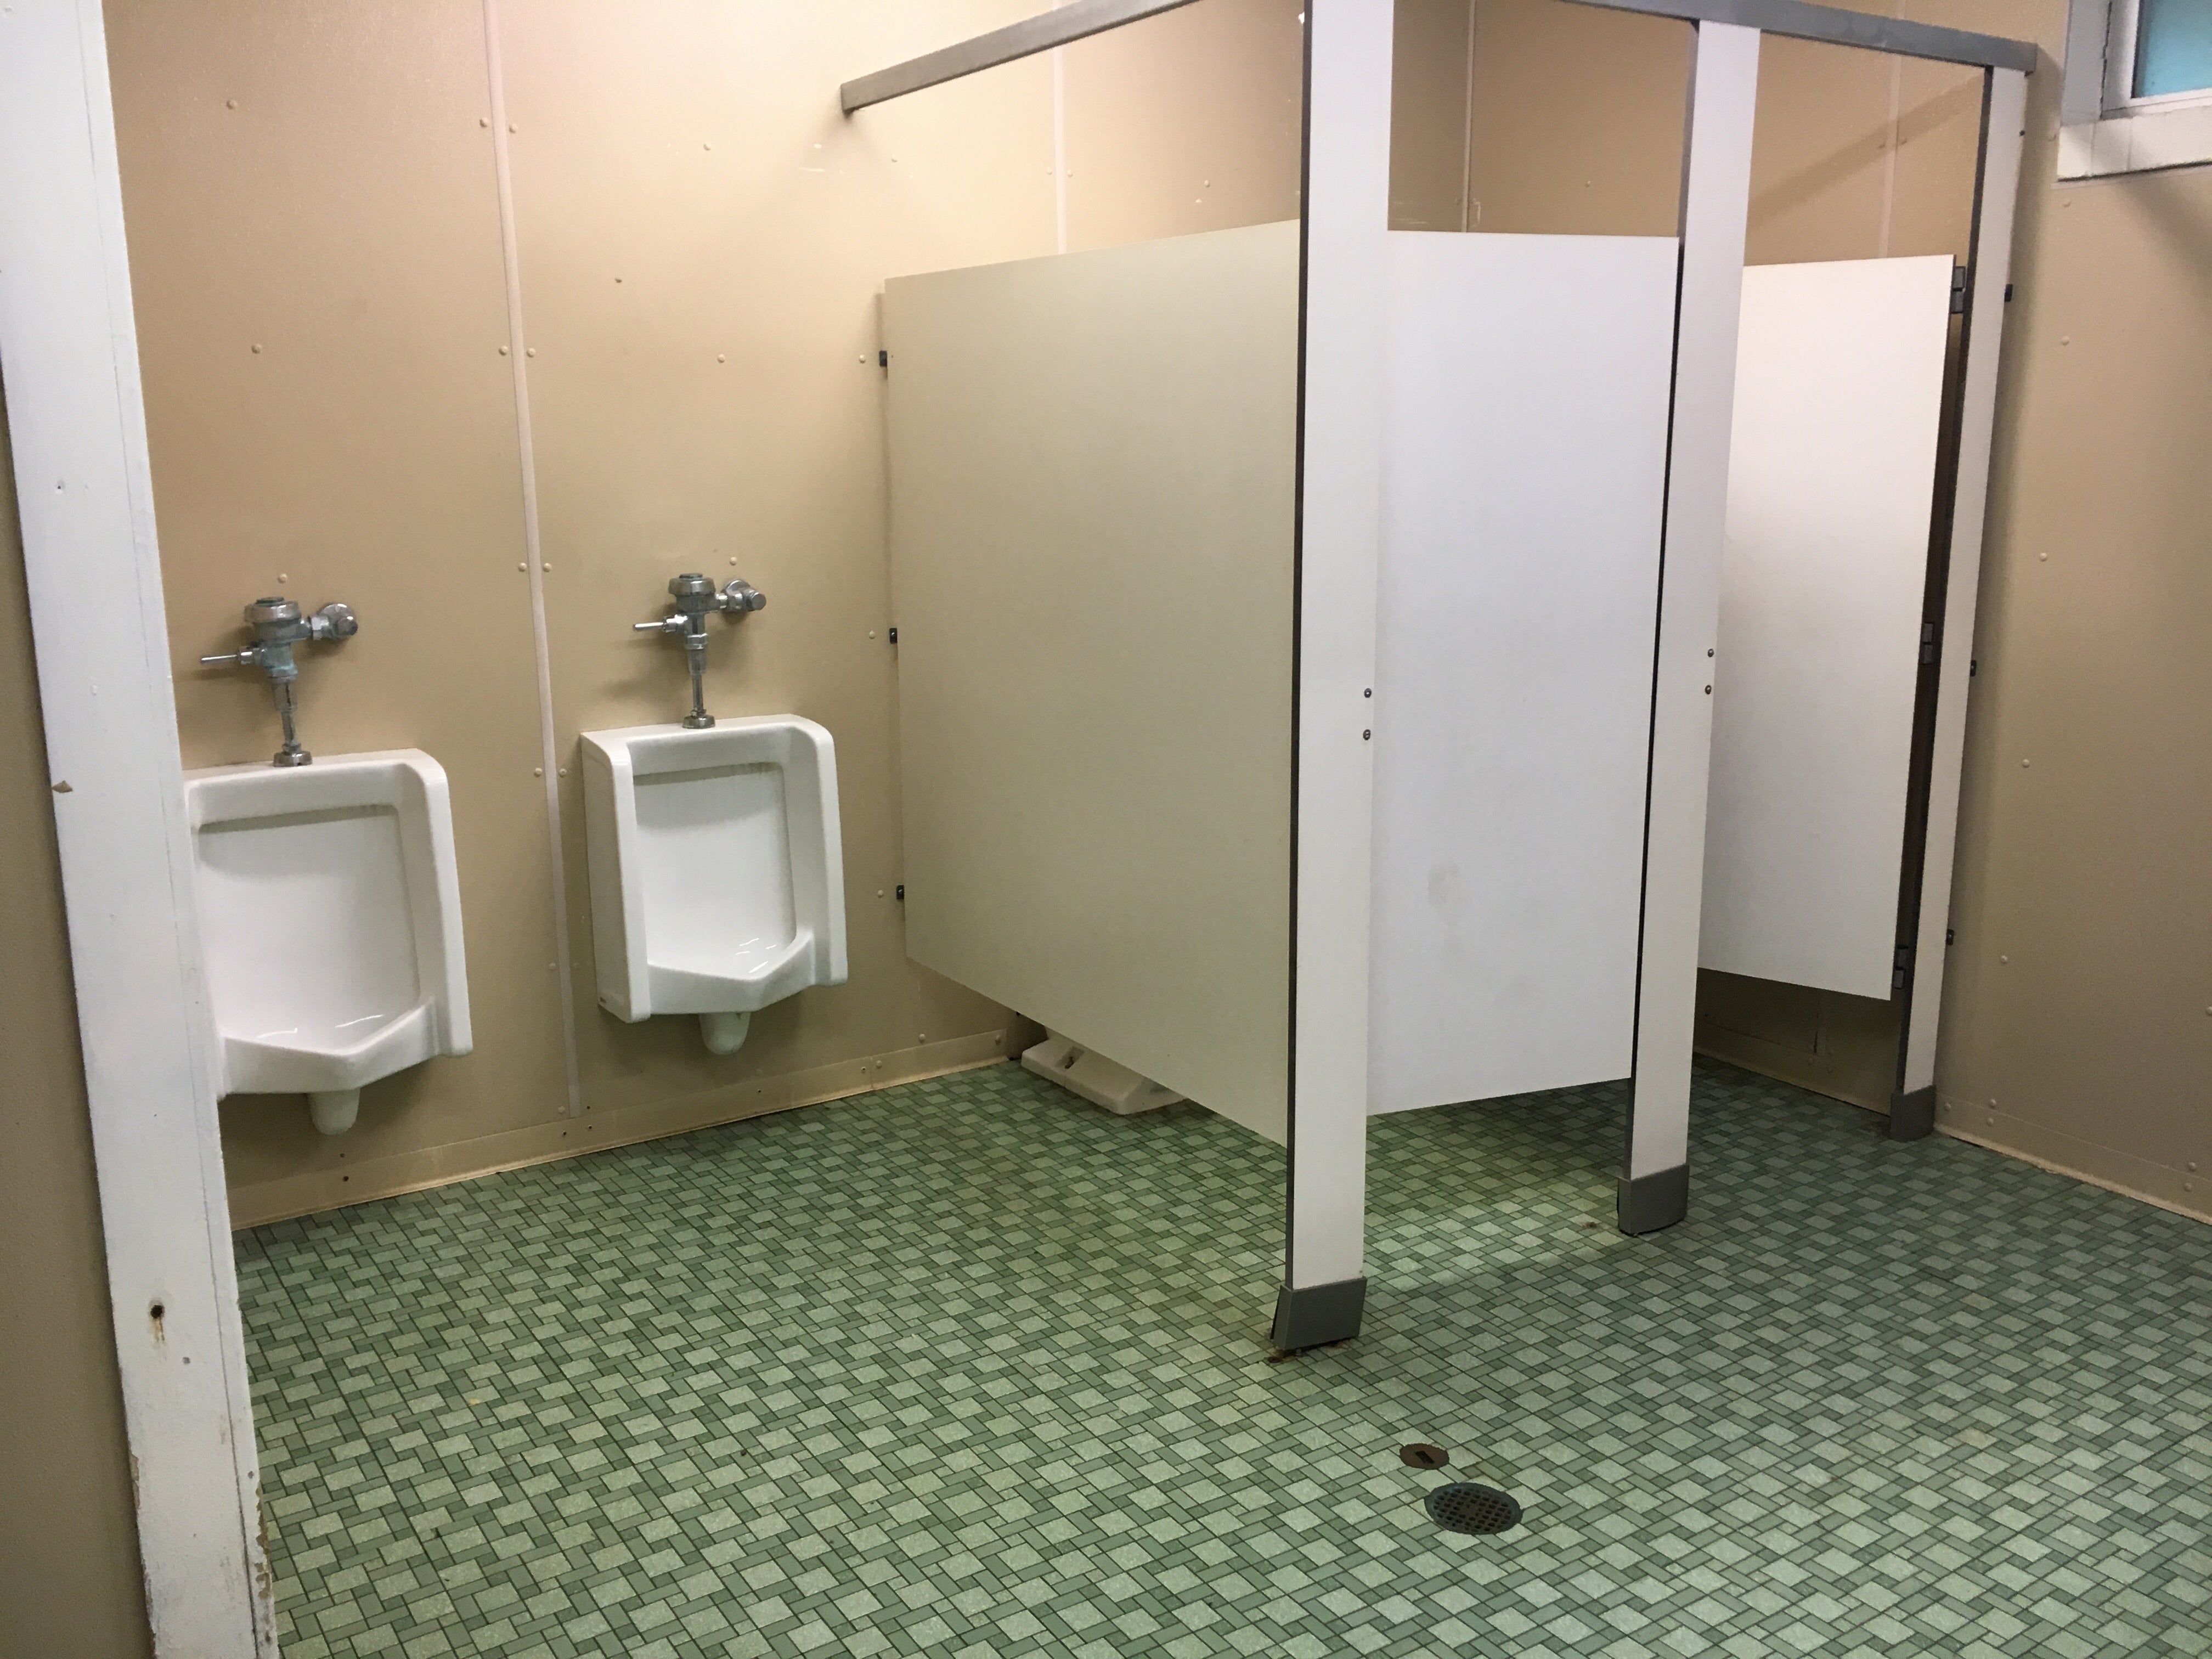 mens restroom near site 58. 